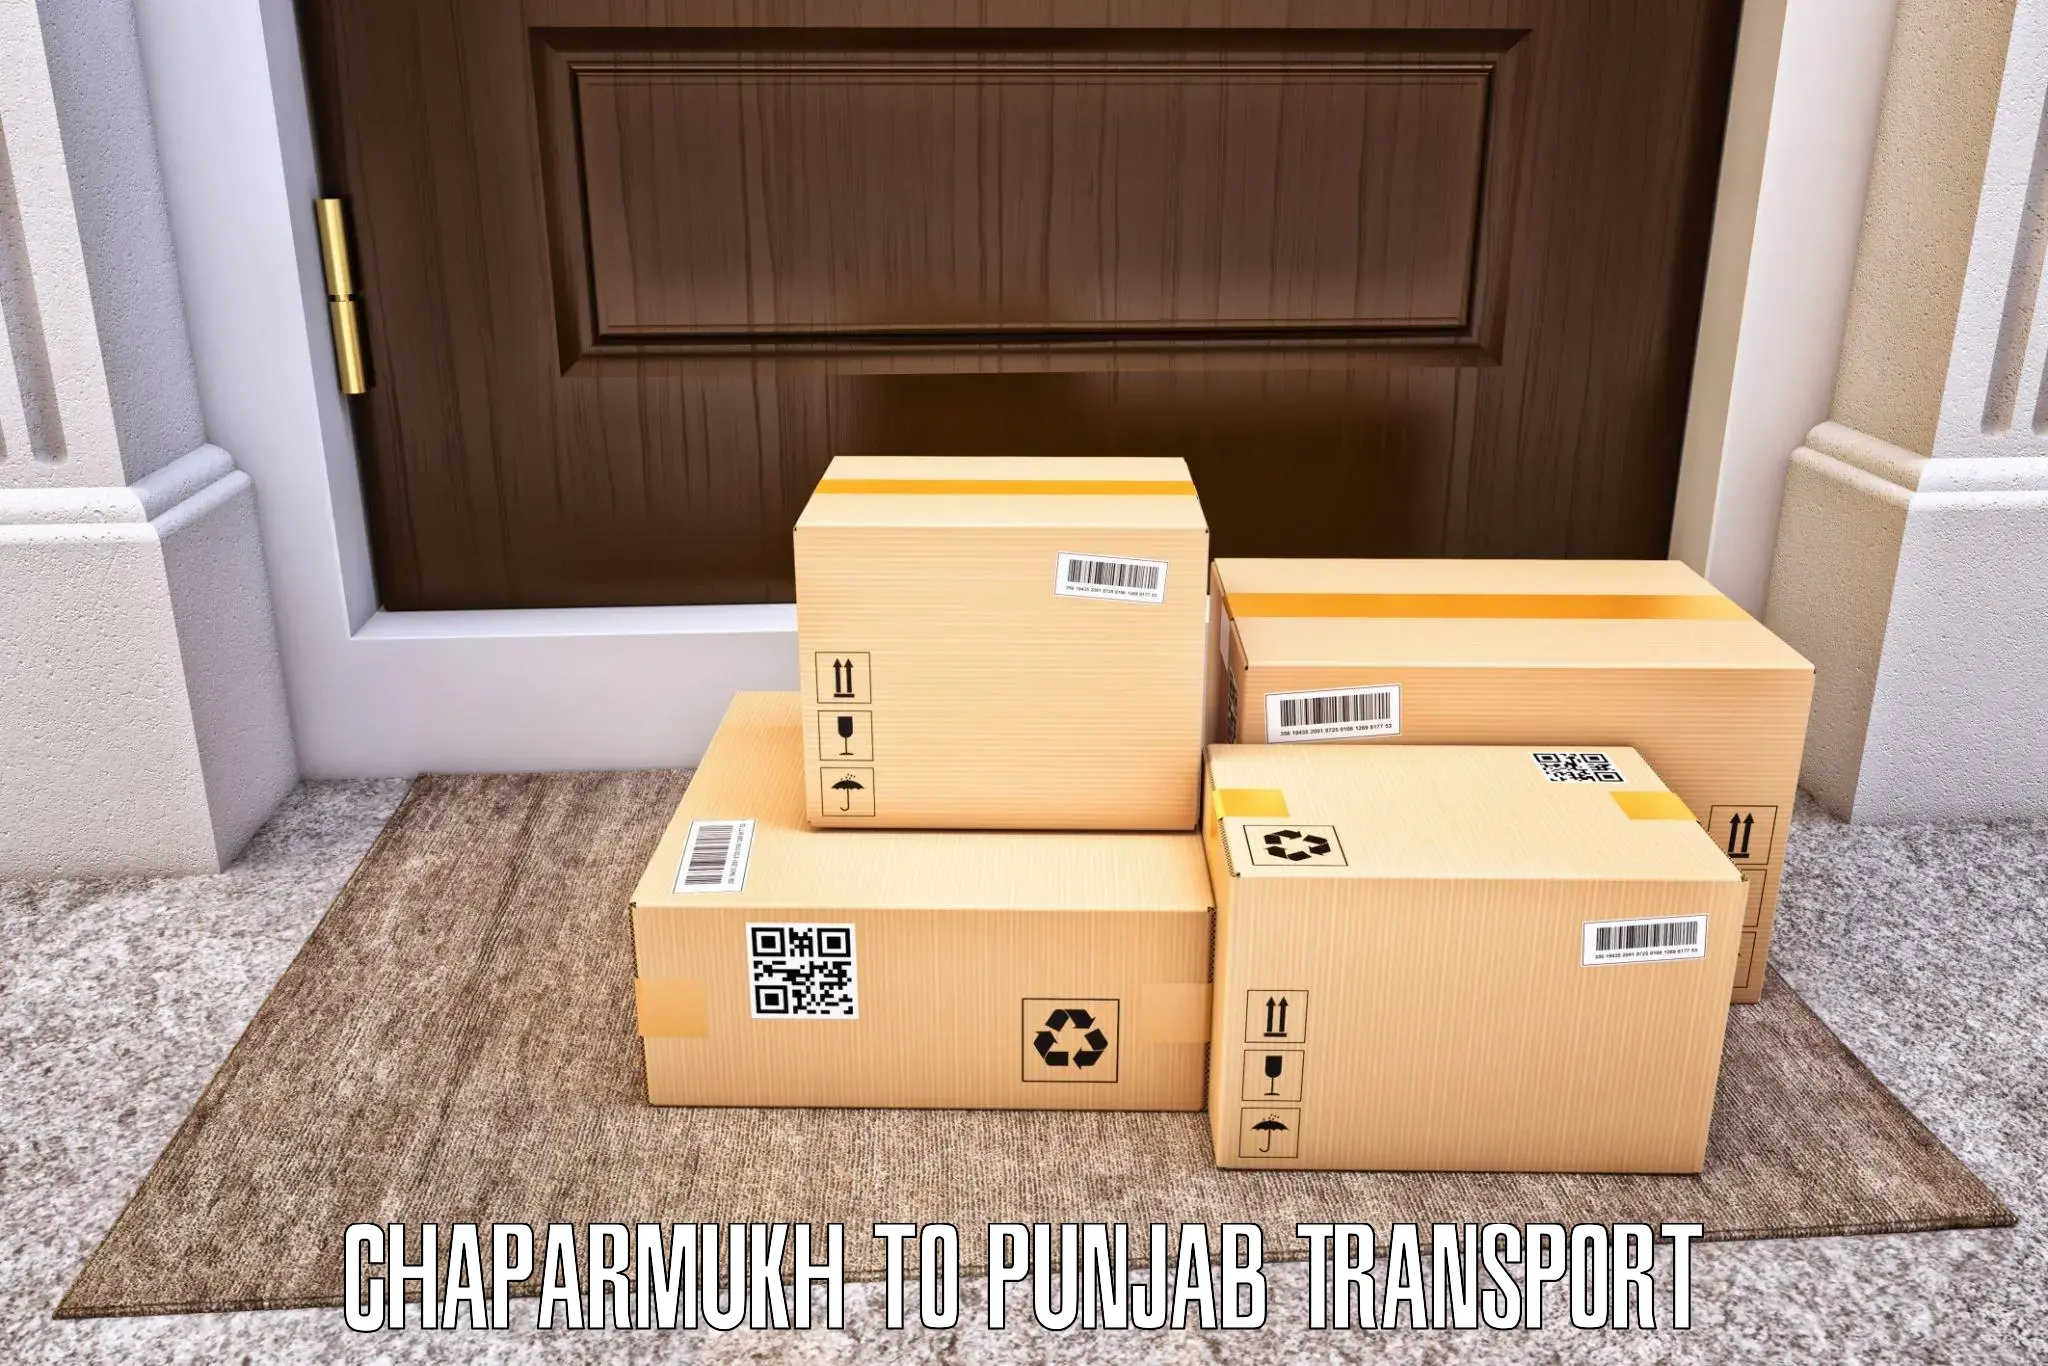 Cargo transportation services Chaparmukh to Dinanagar